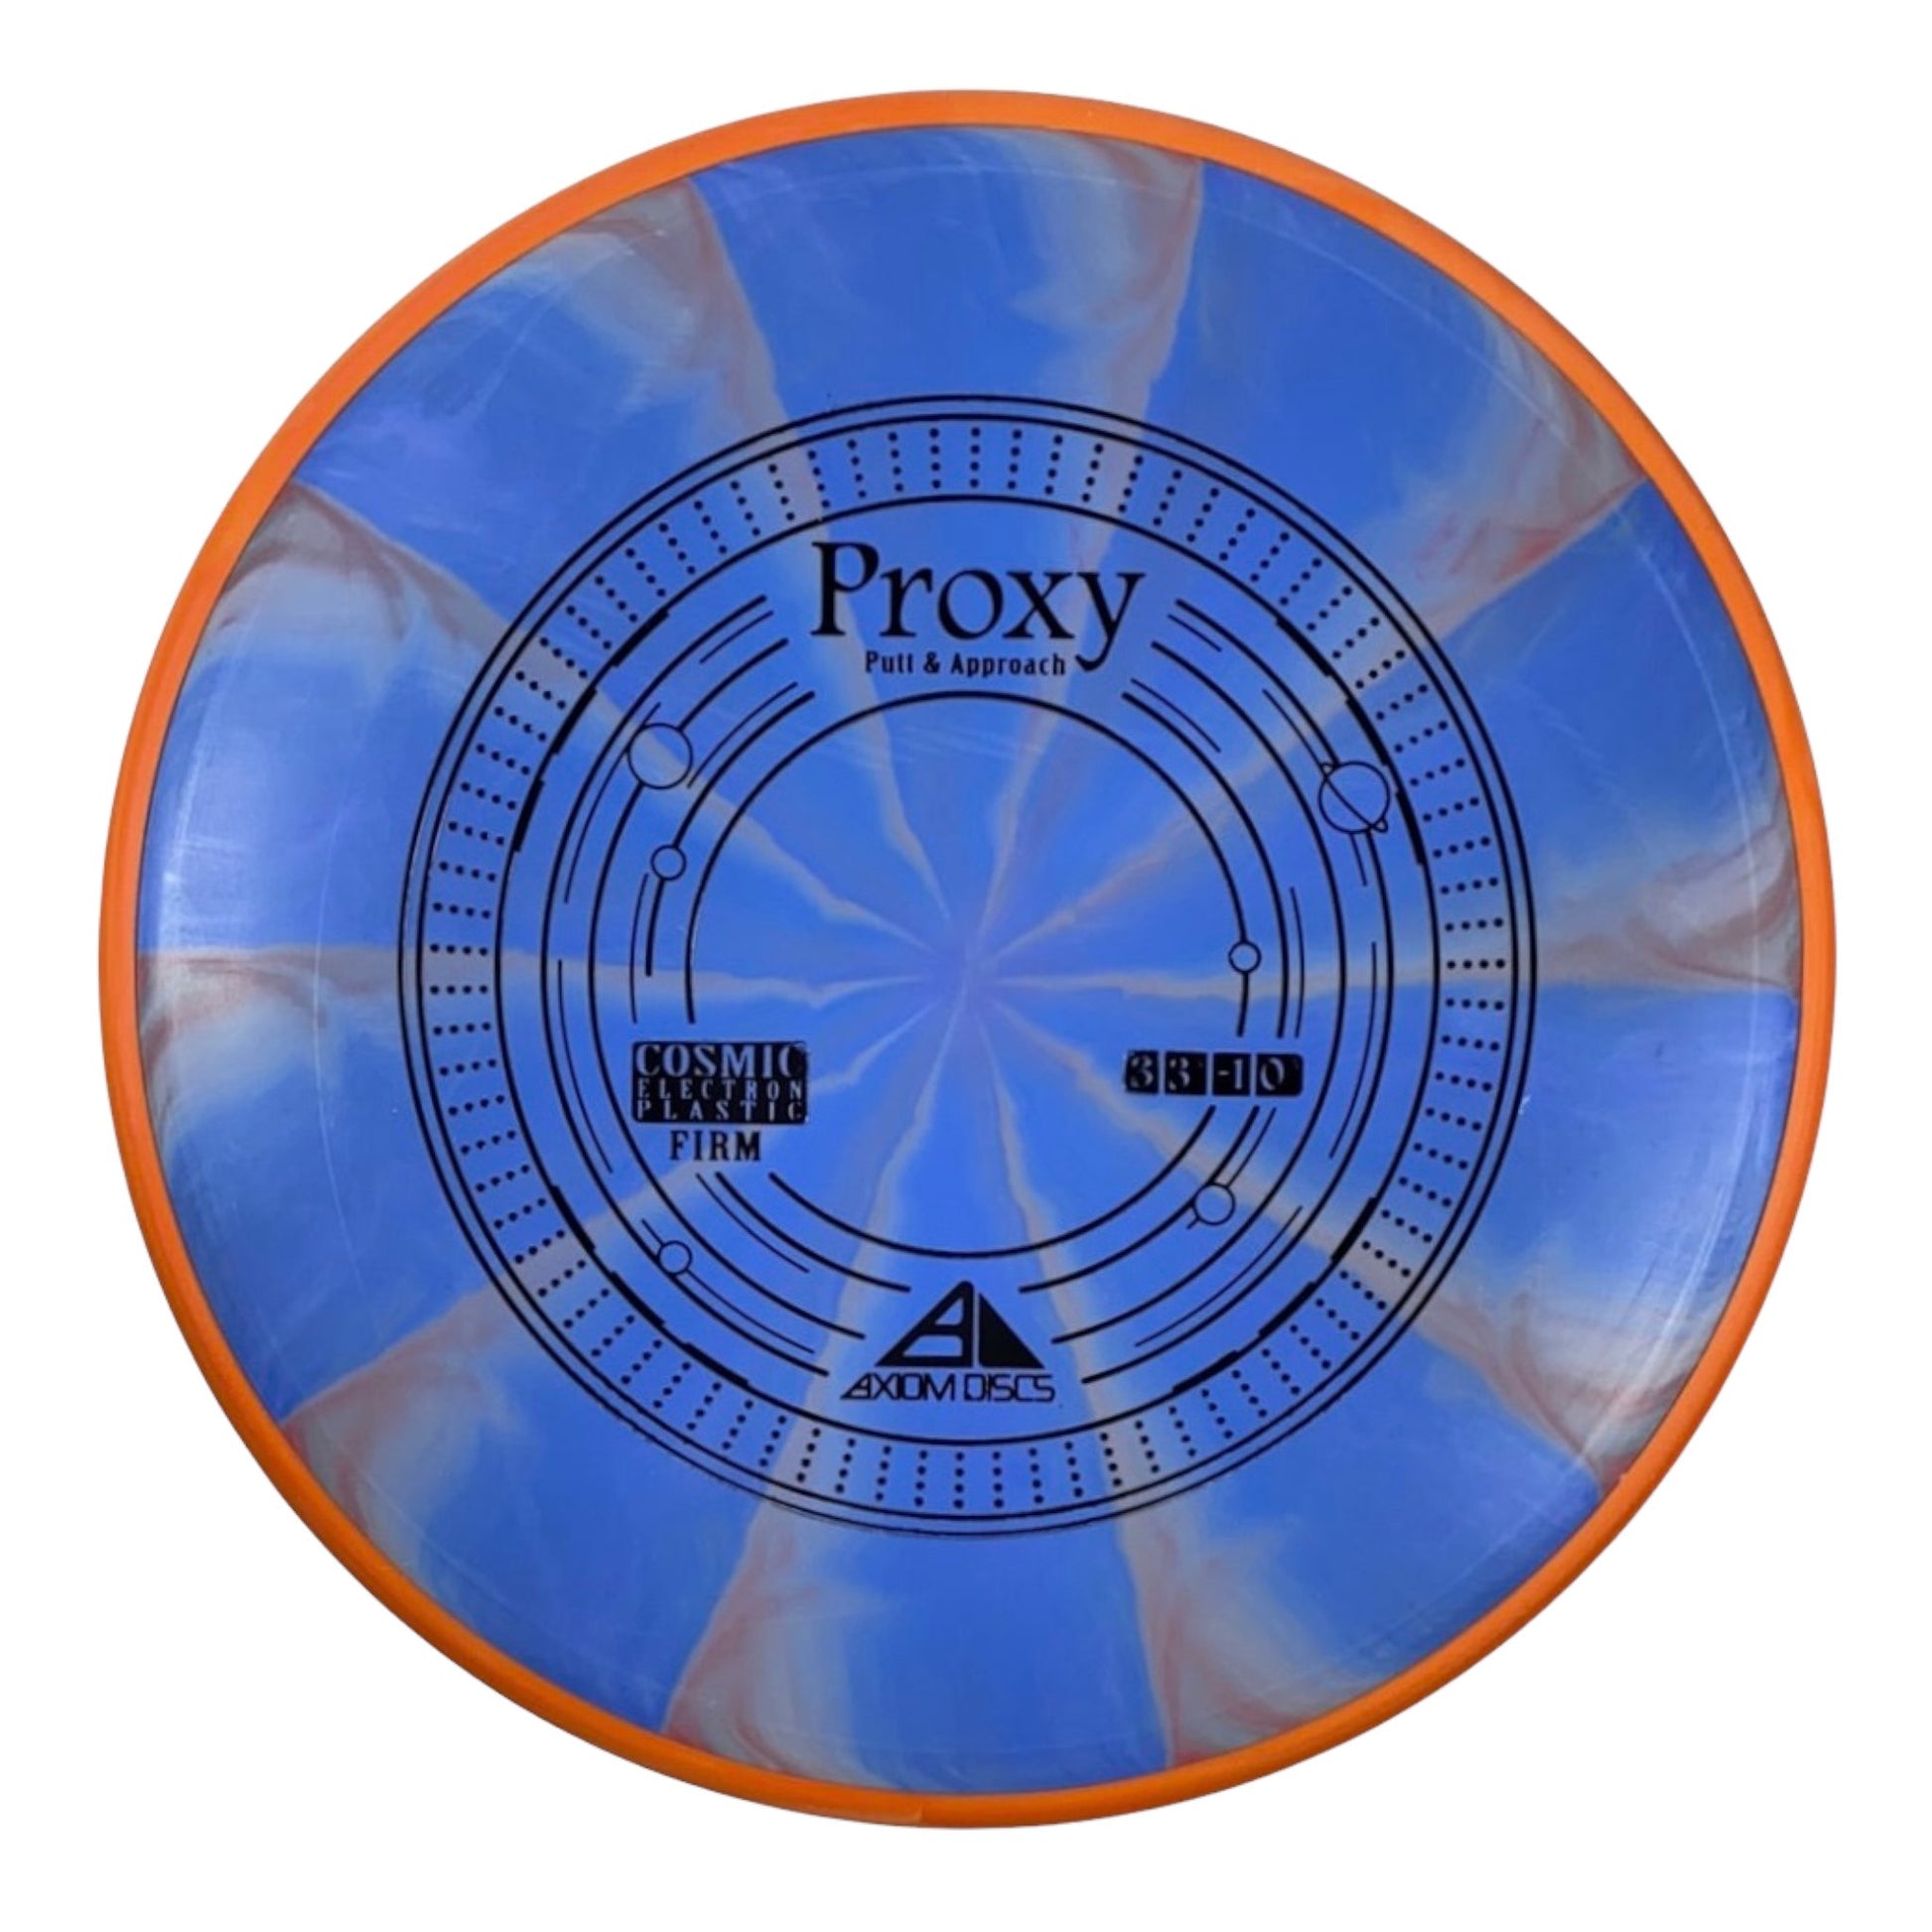 Axiom Discs Proxy | Cosmic Electron Firm | Blue/Orange 165g